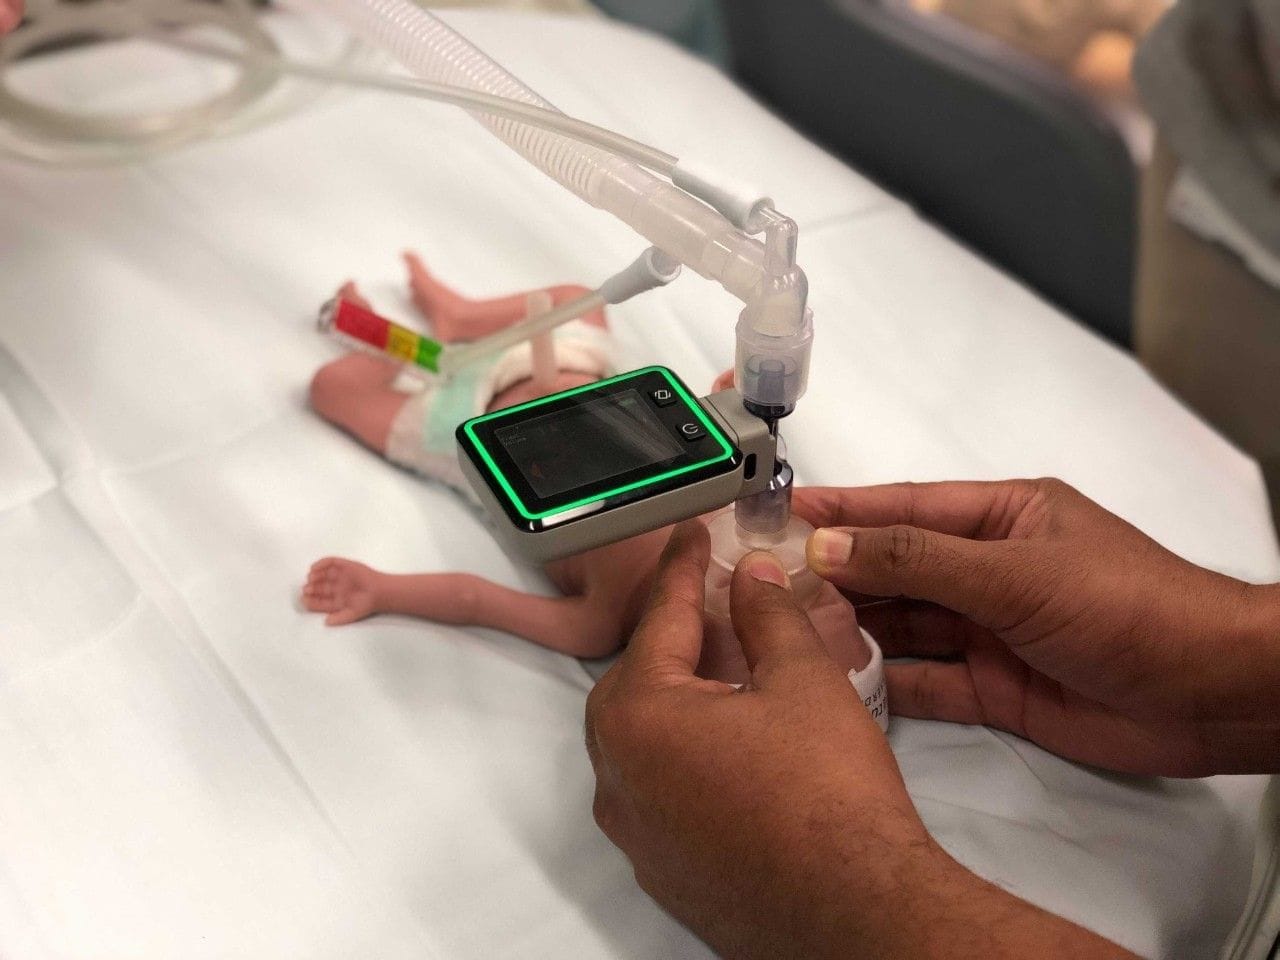 Investors breathe new life into $3.8m biomedical startup ResusRight to save newborns